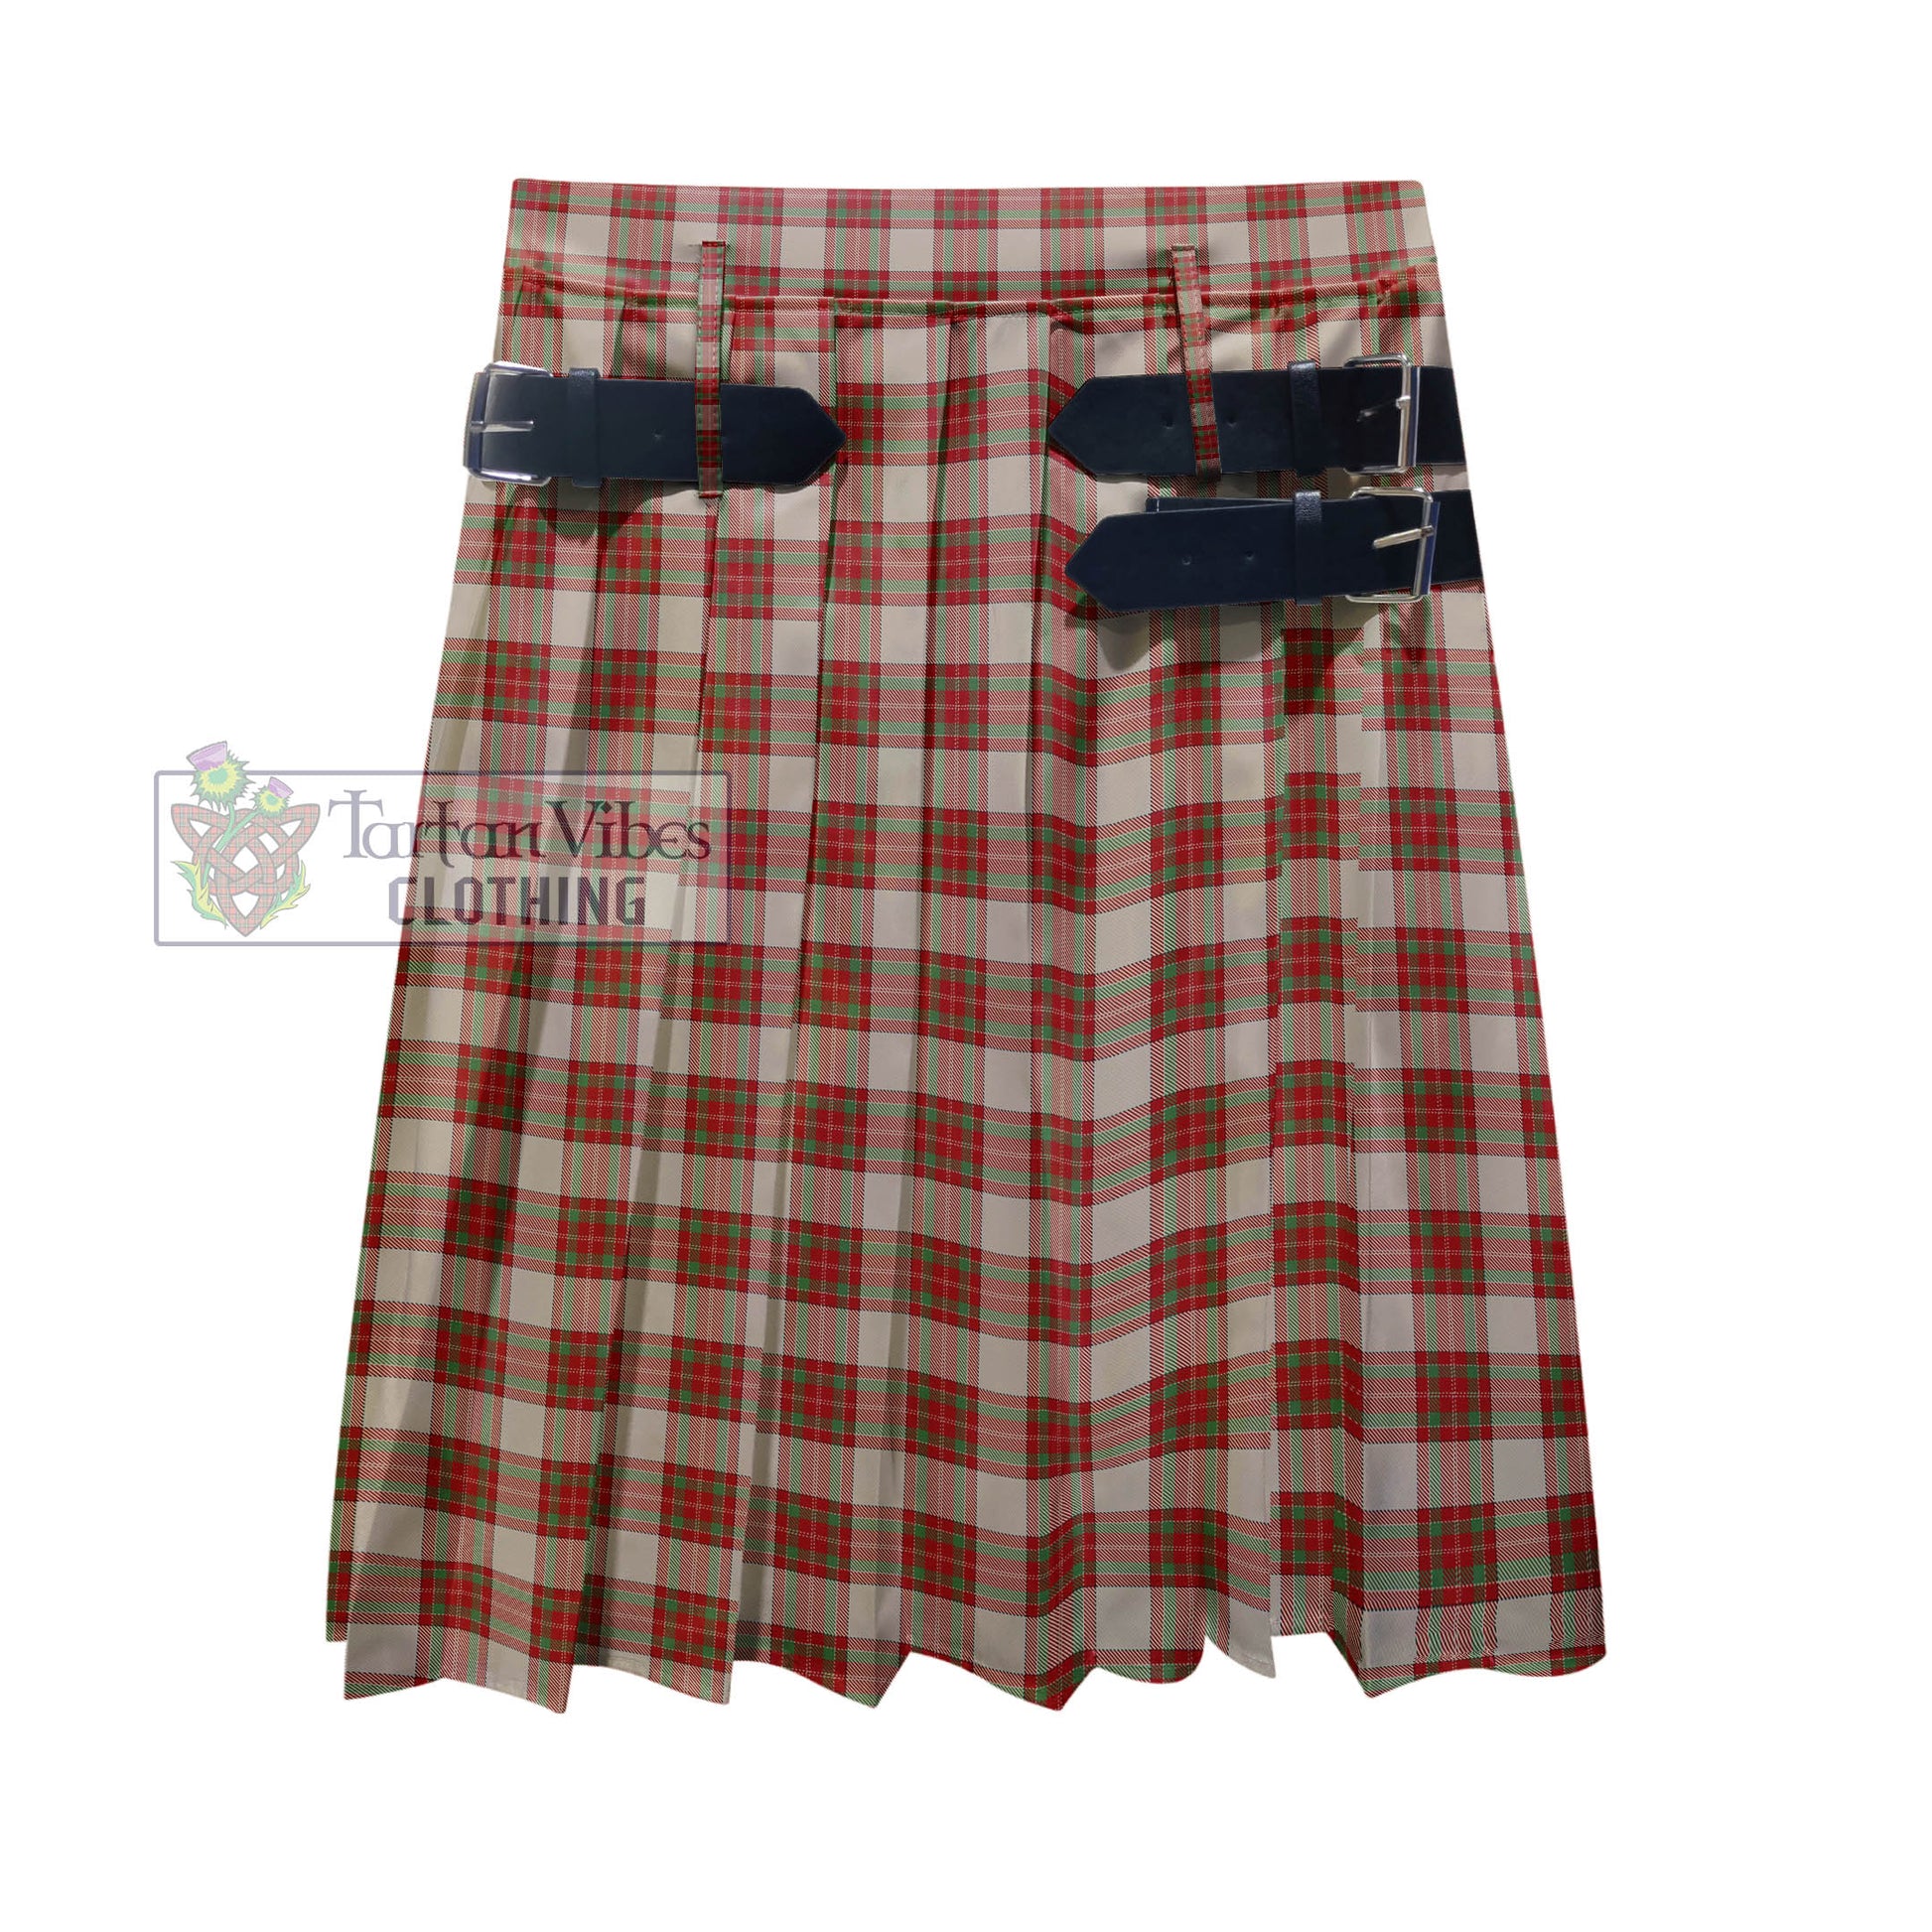 Tartan Vibes Clothing McBrayer Dress Tartan Men's Pleated Skirt - Fashion Casual Retro Scottish Style